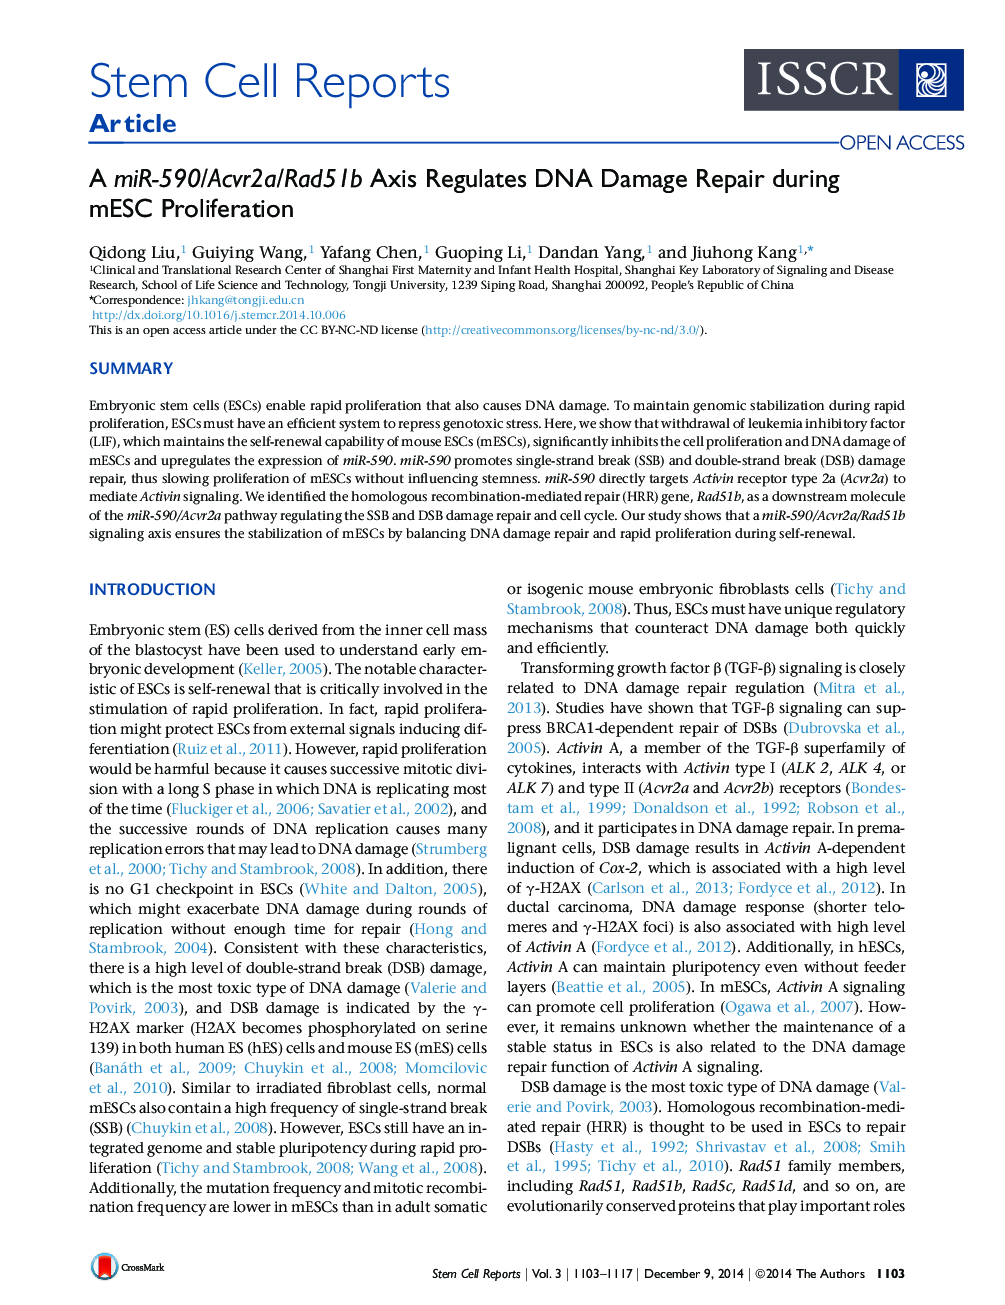 A miR-590/Acvr2a/Rad51b Axis Regulates DNA Damage Repair during mESC Proliferation 